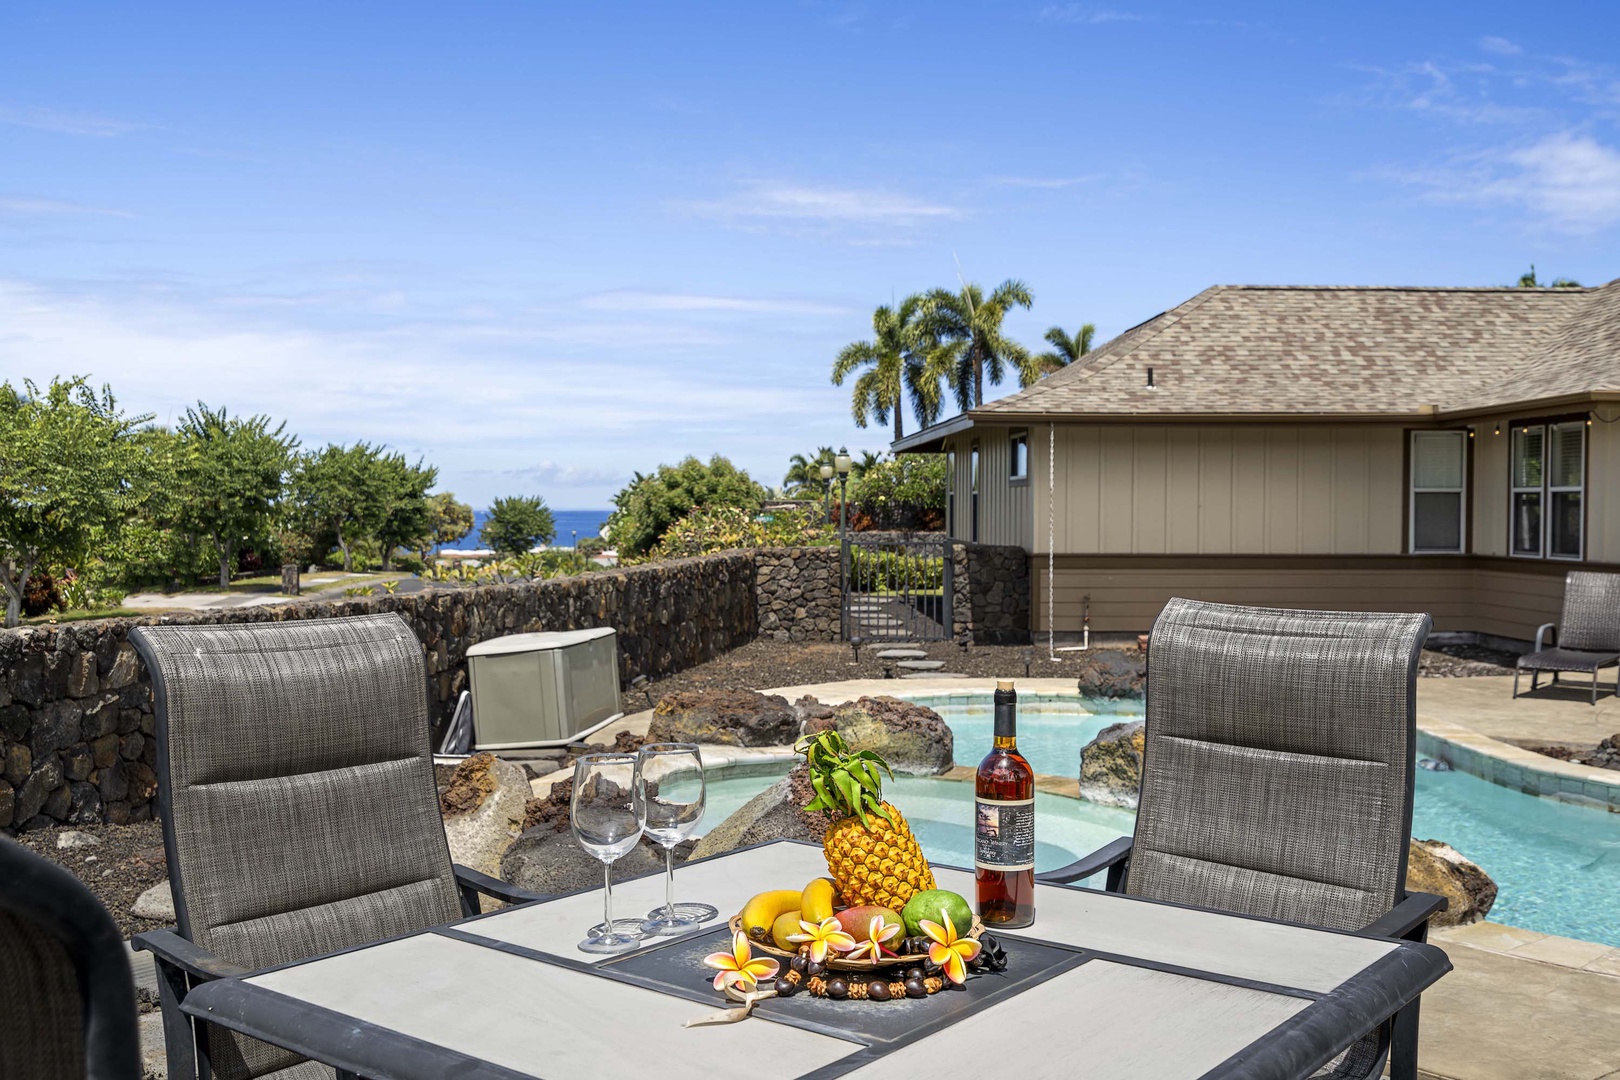 Kailua Kona Vacation Rentals, Kahakai Estates Hale - Relaxation, served poolside